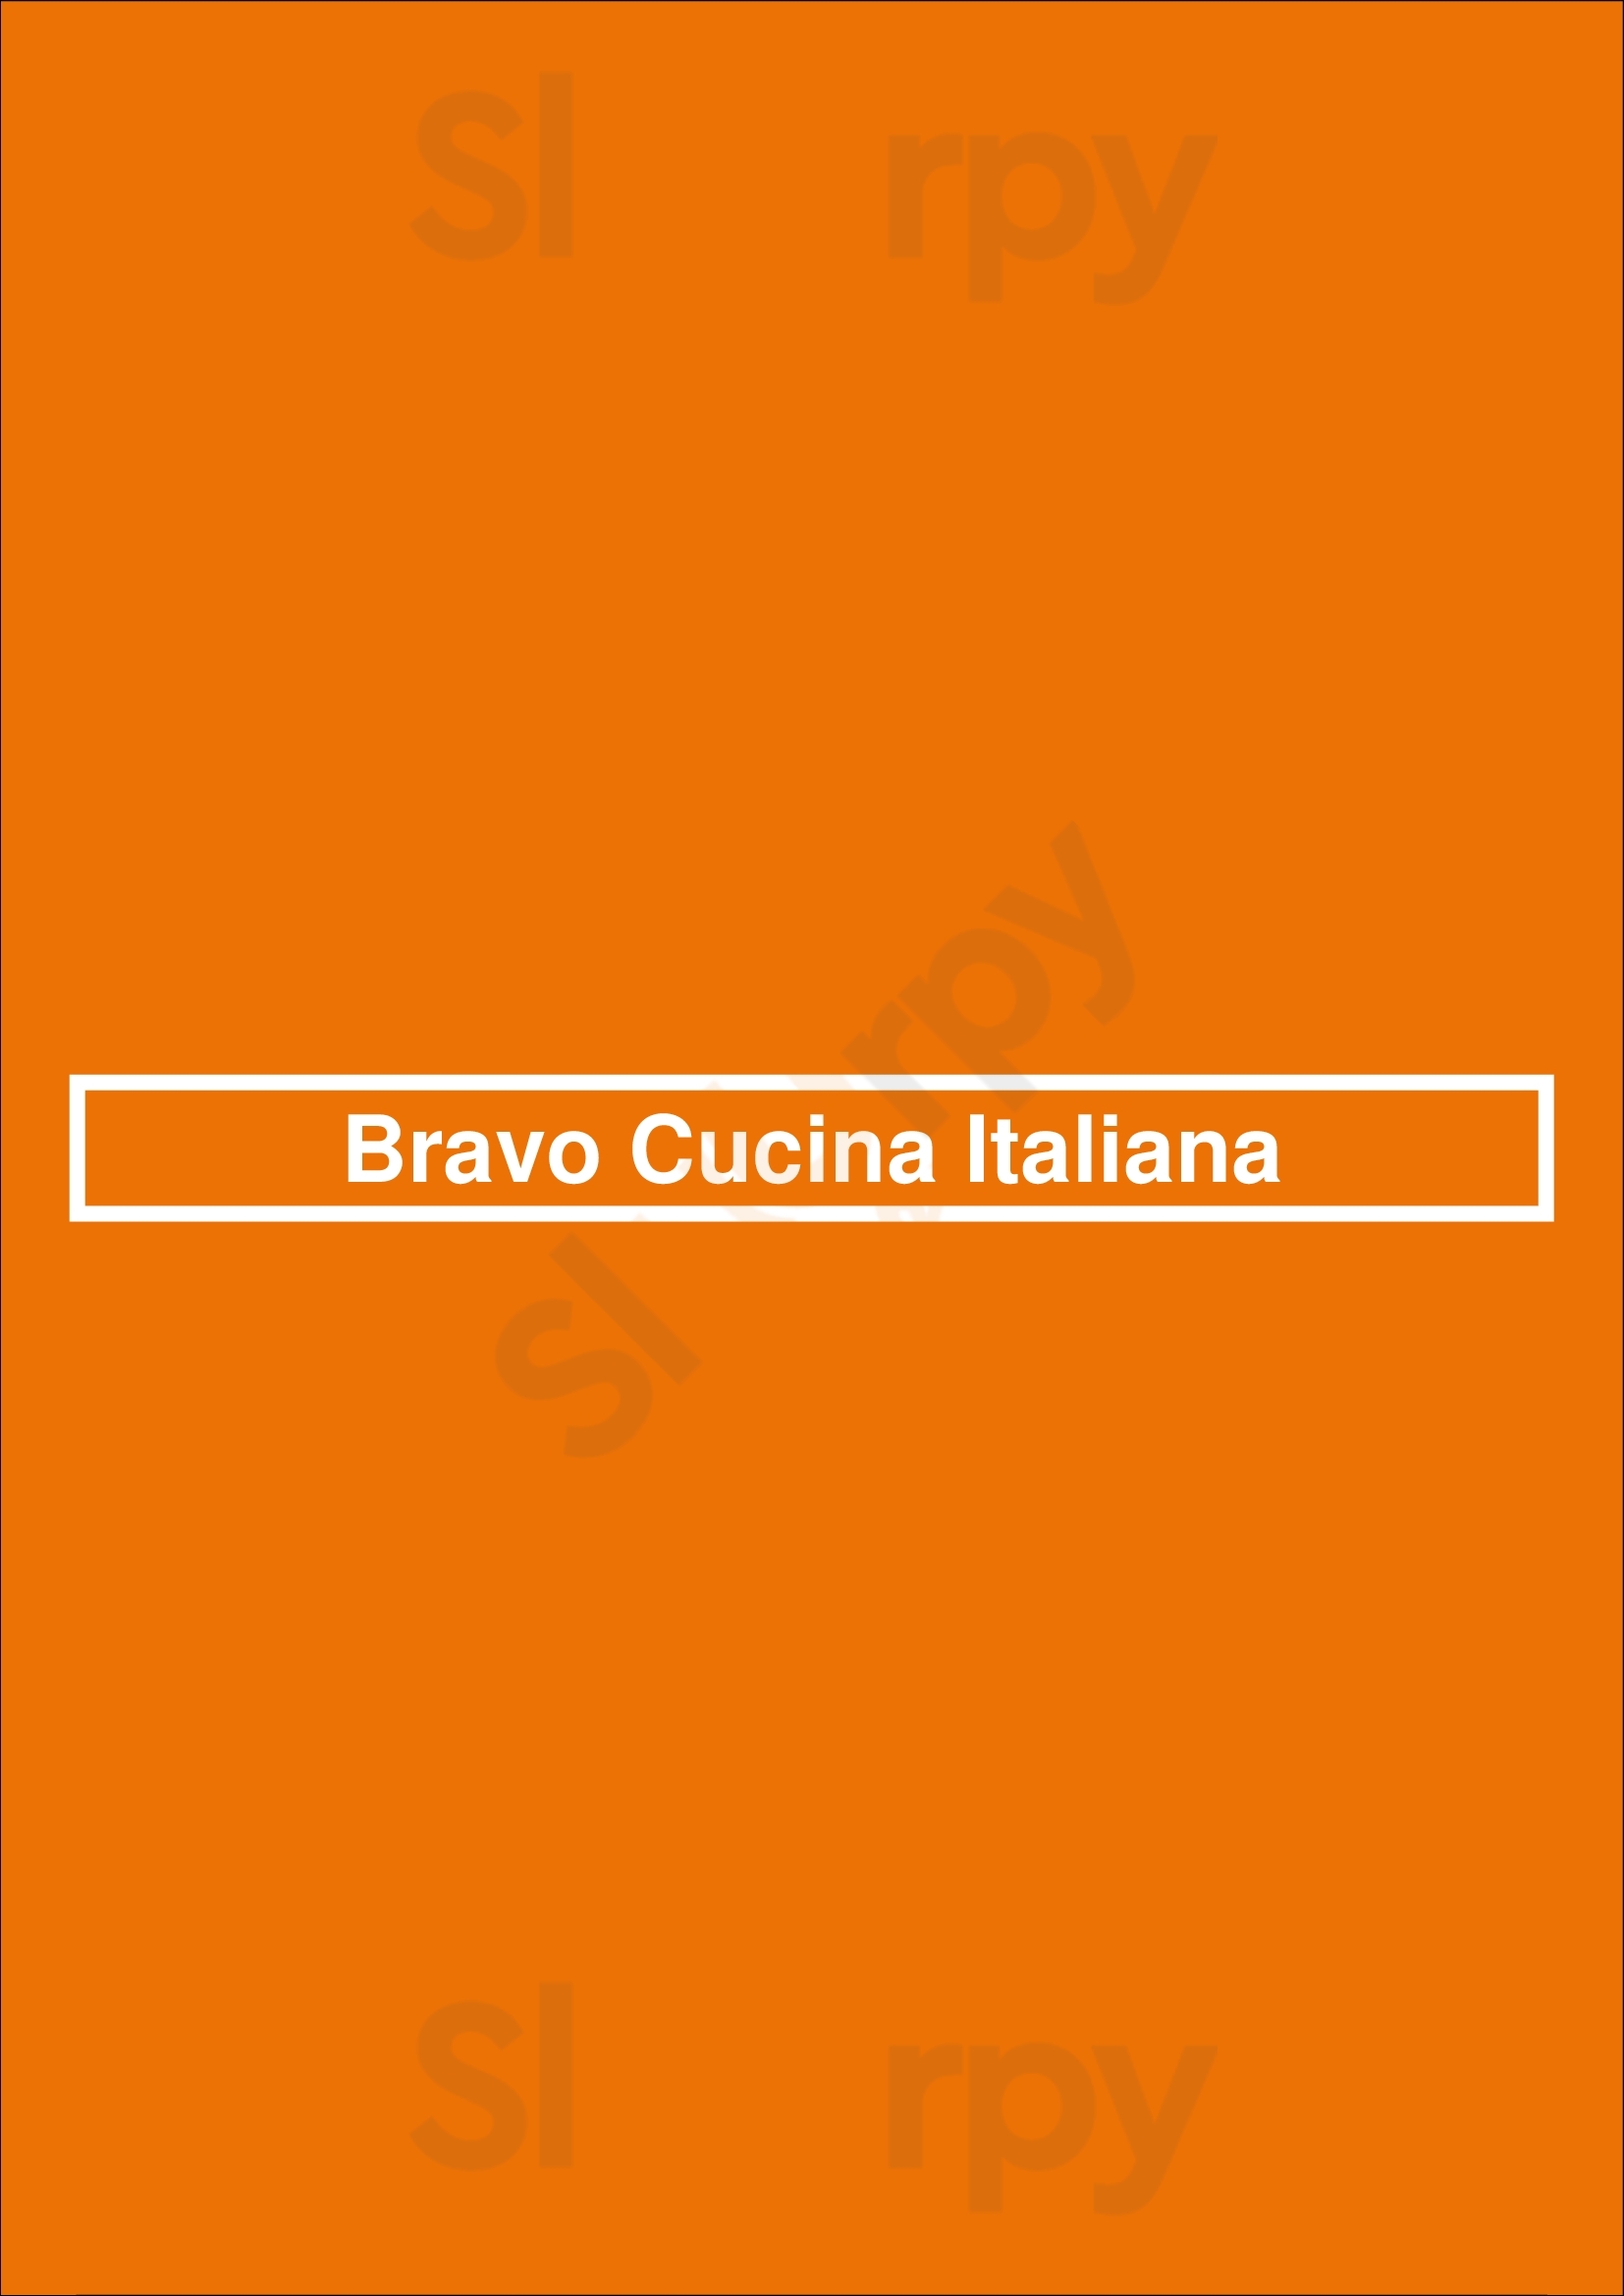 Bravo! Italian Kitchen Greensboro Menu - 1